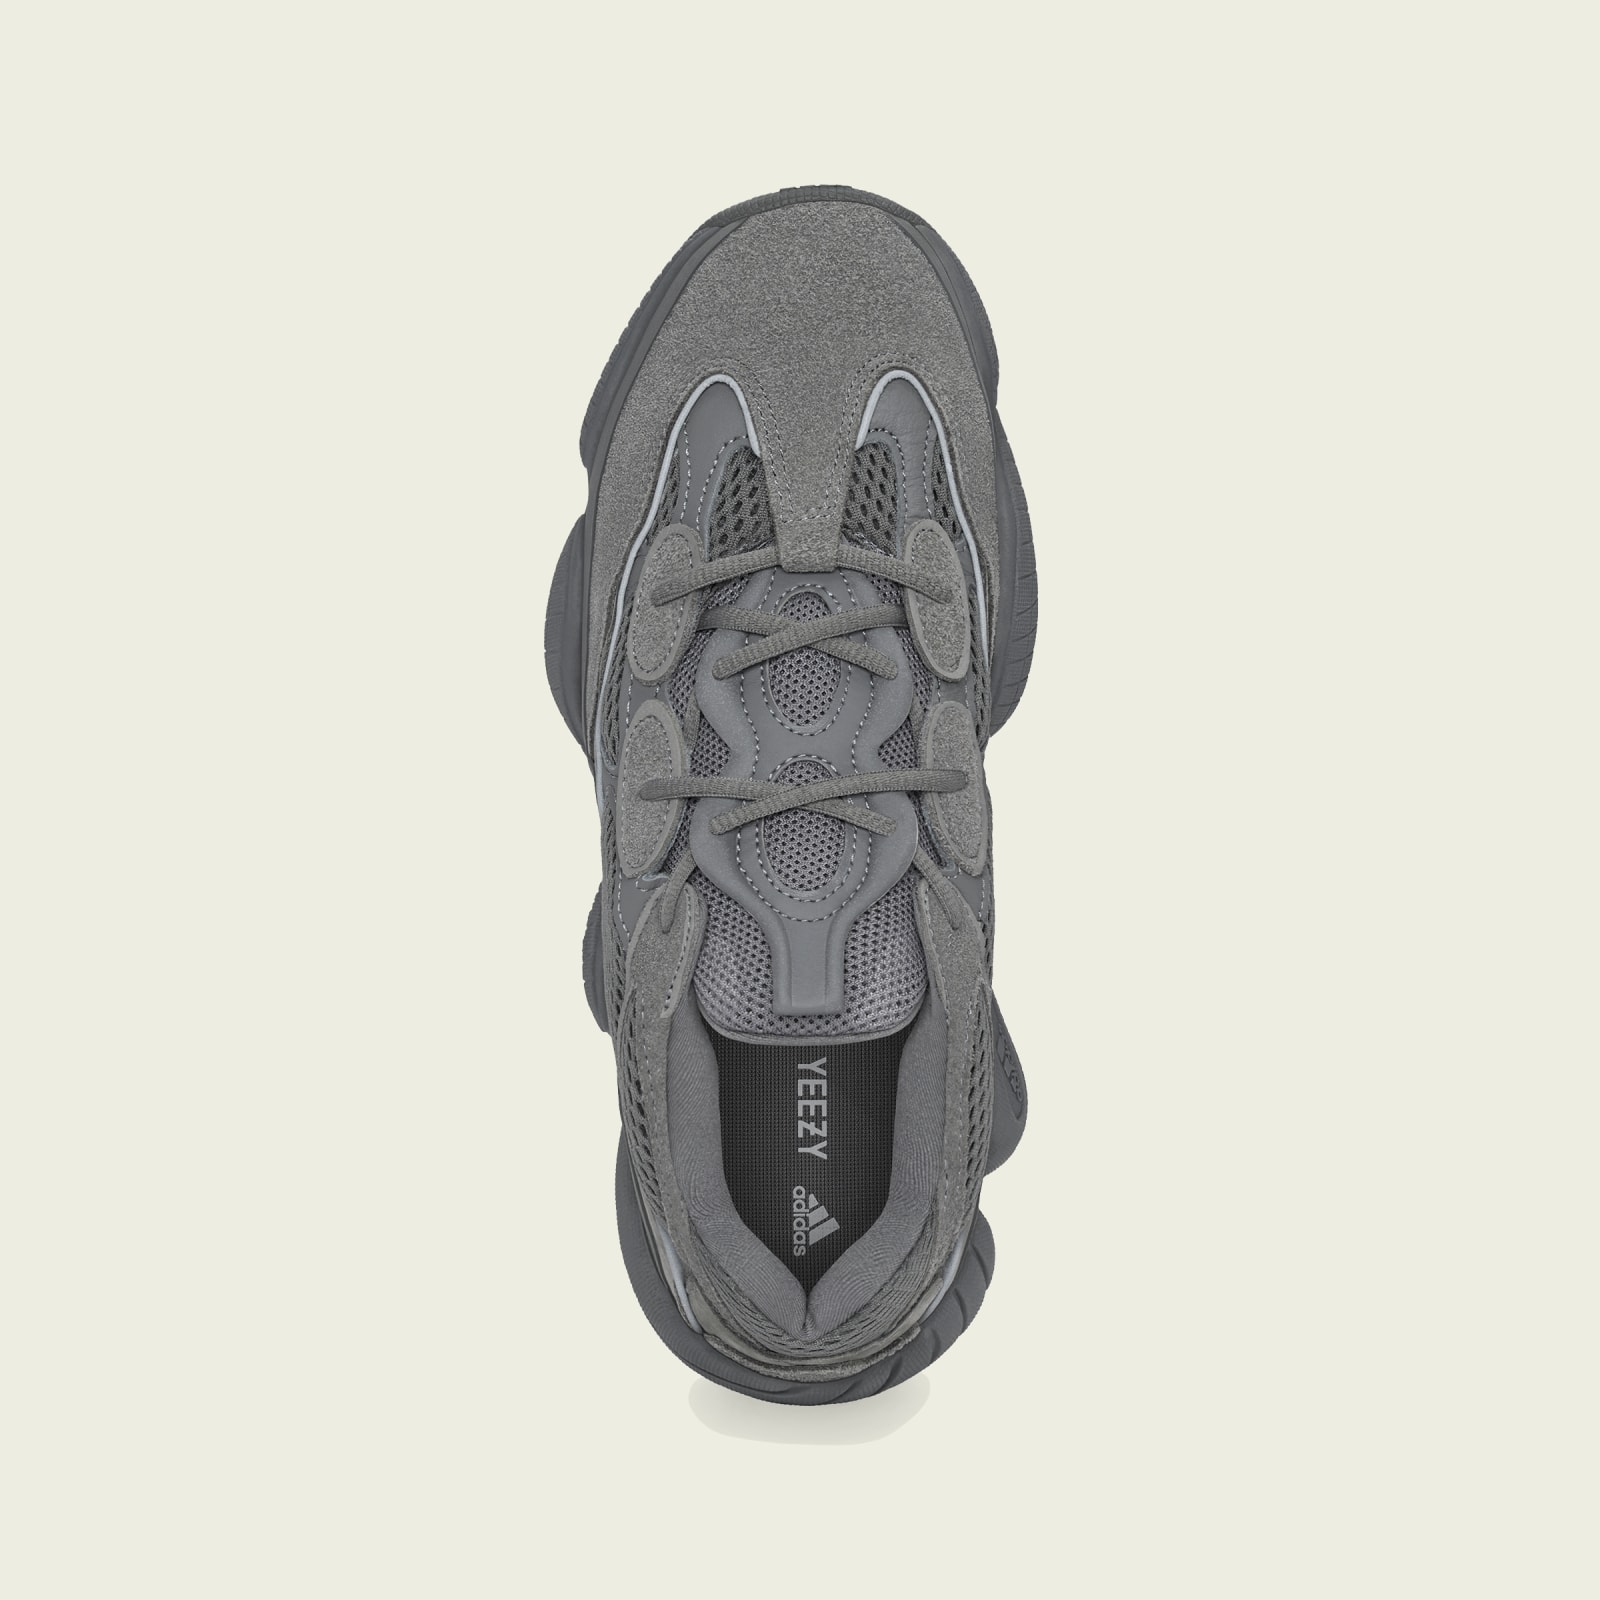 Adidas Yeezy 500
« Granite »